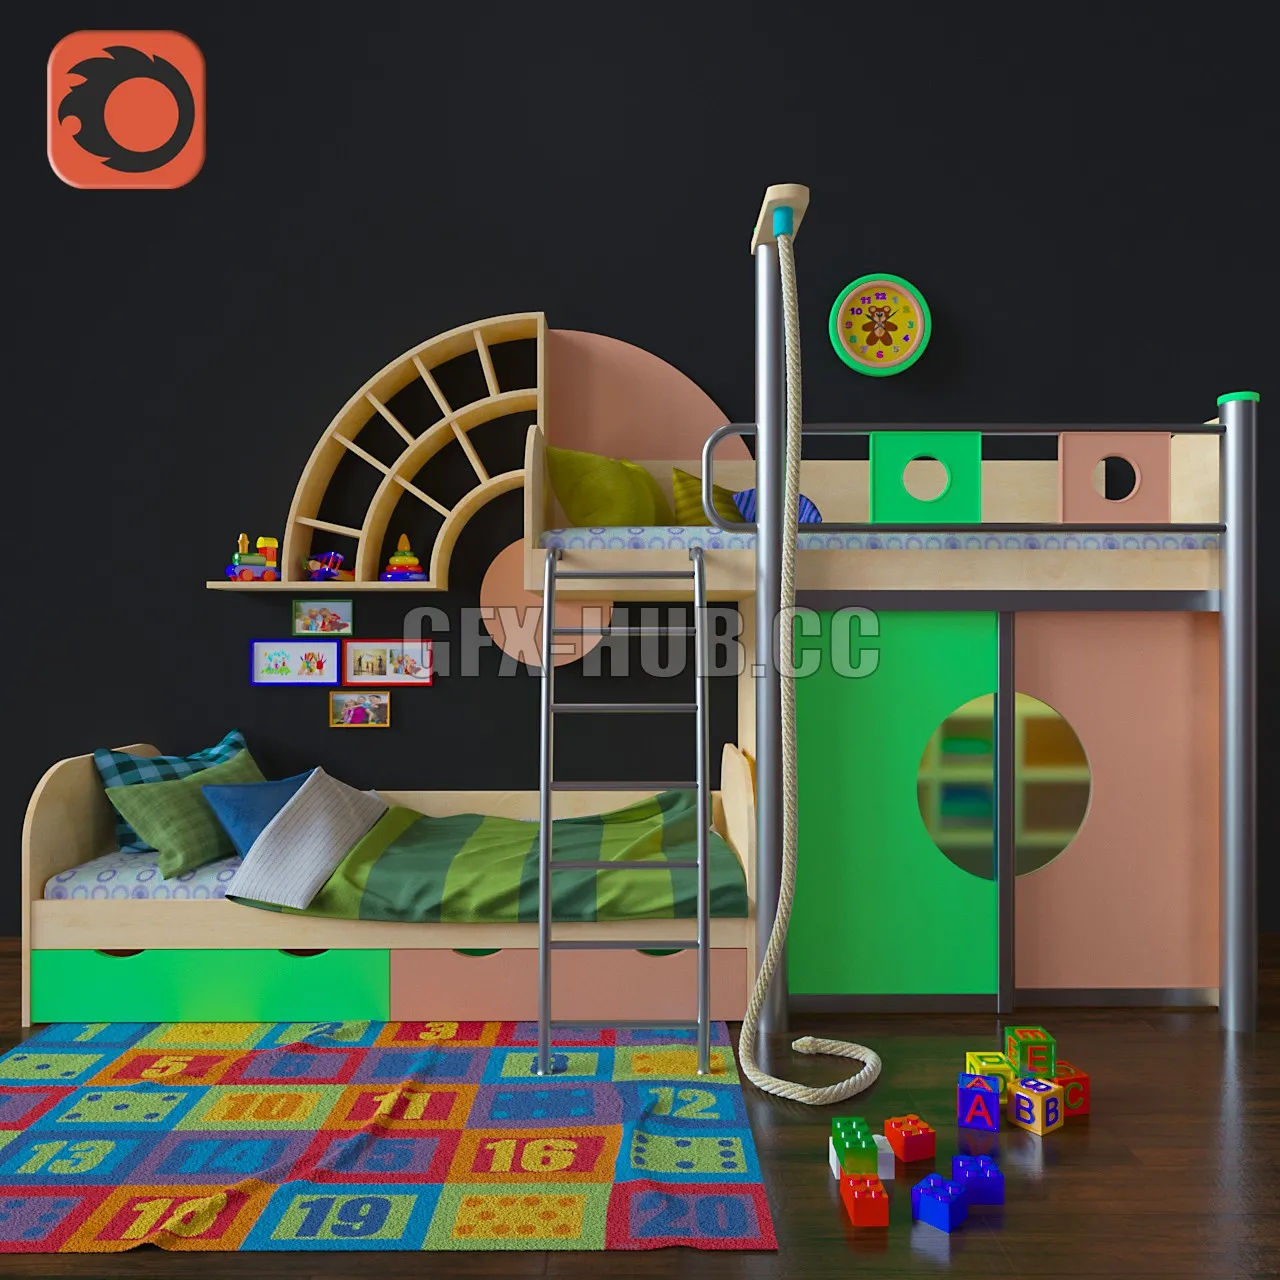 CHILDREN – Children’s furniture Over the Rainbow with decor